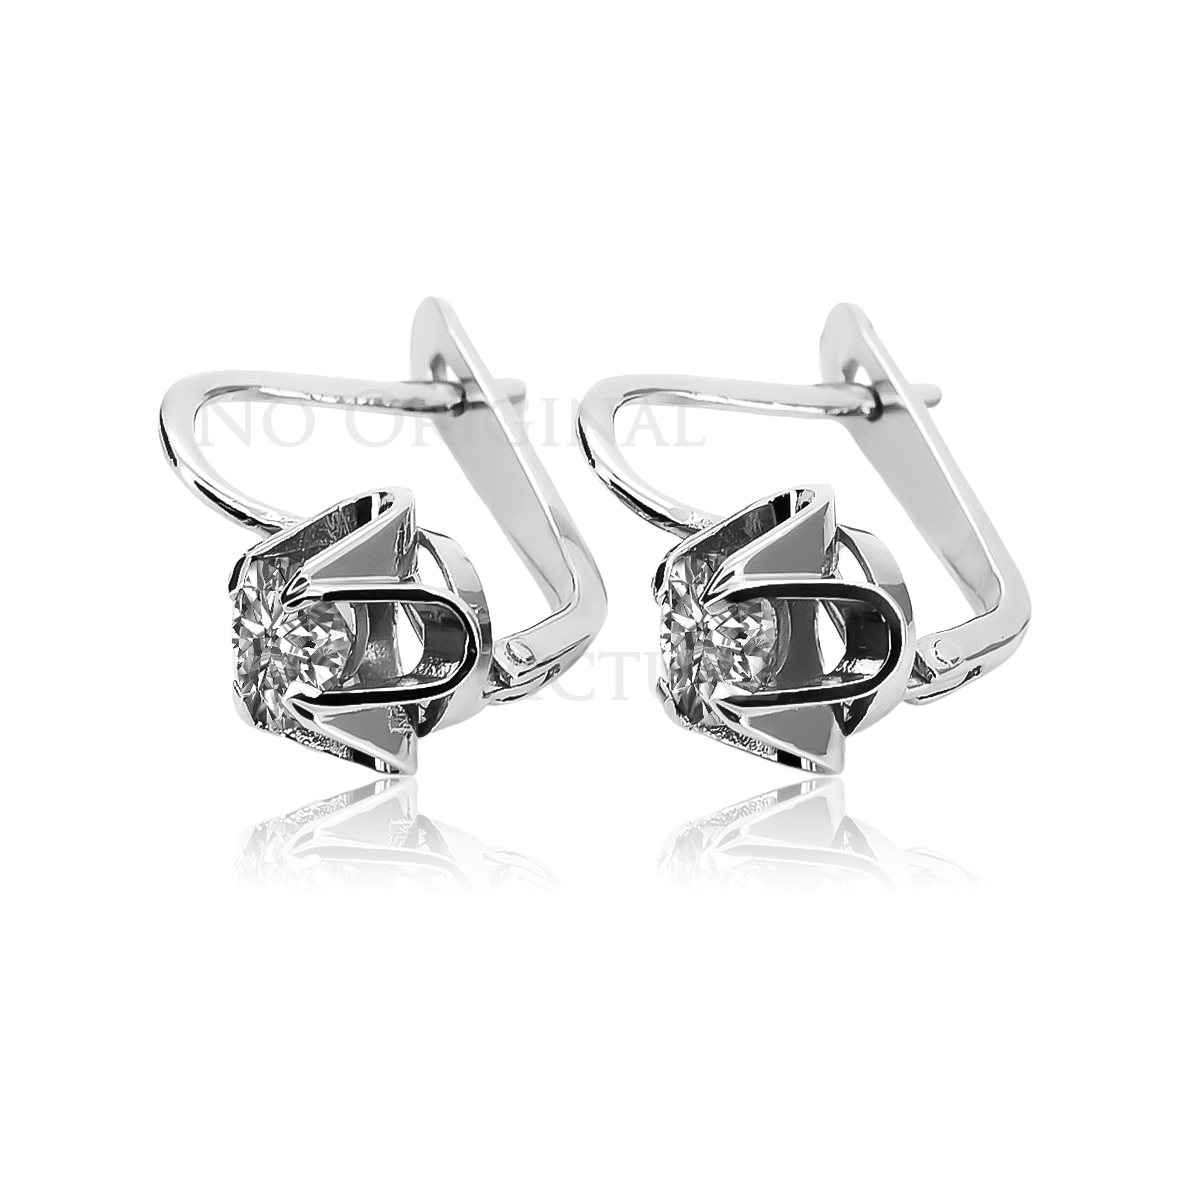 Vintage 925 Silver Setting earrings vec018s